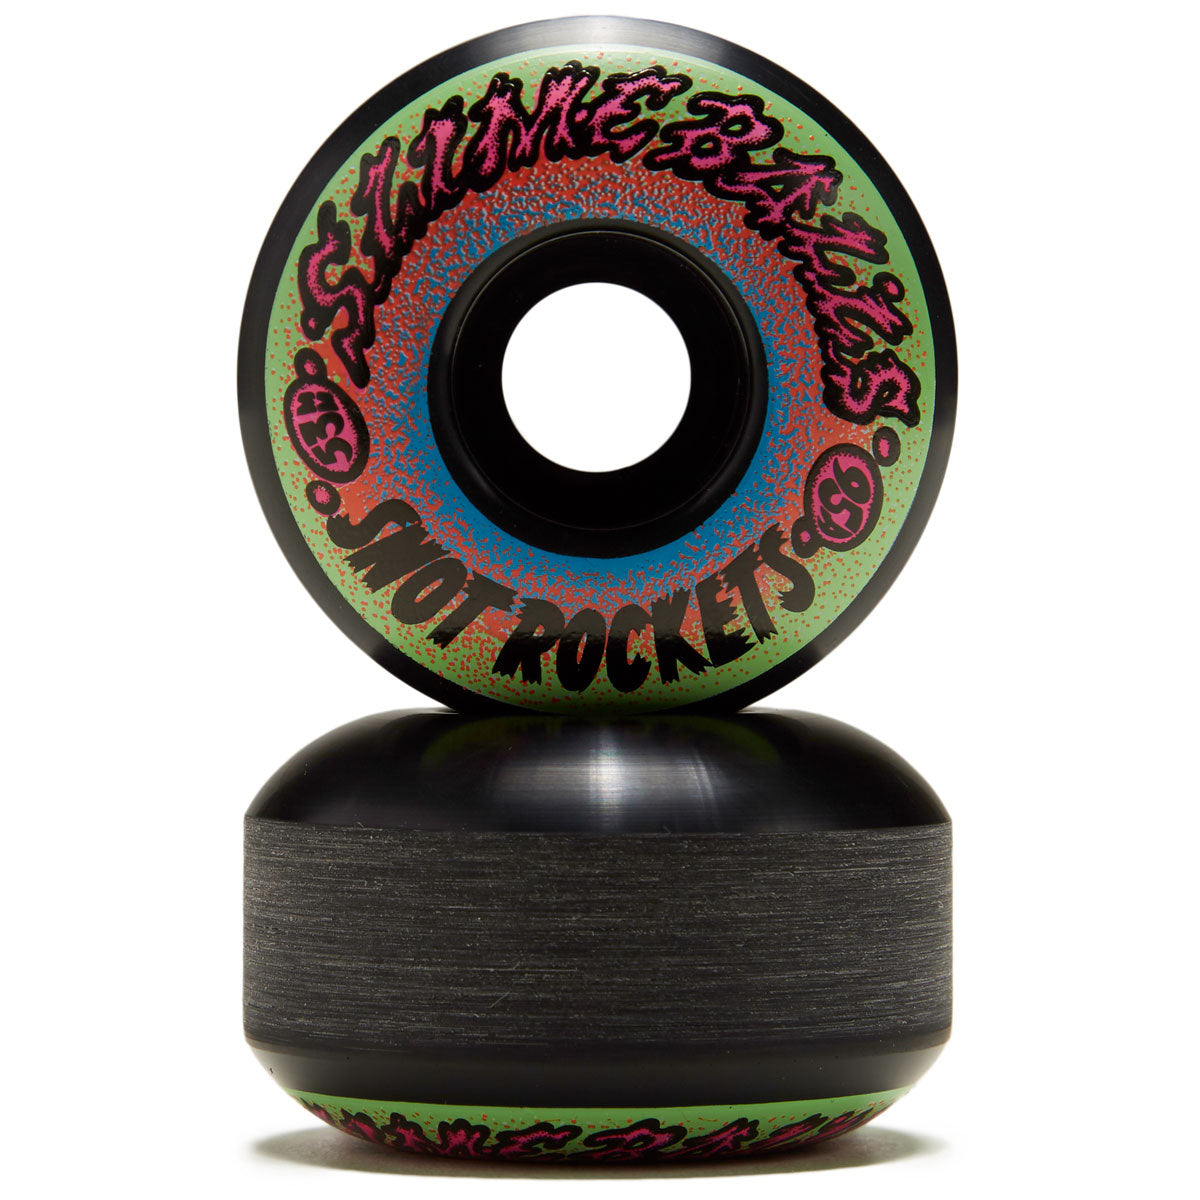 Slime Balls Snot Rockets 95a Skateboard Wheels - Black - 53mm image 2